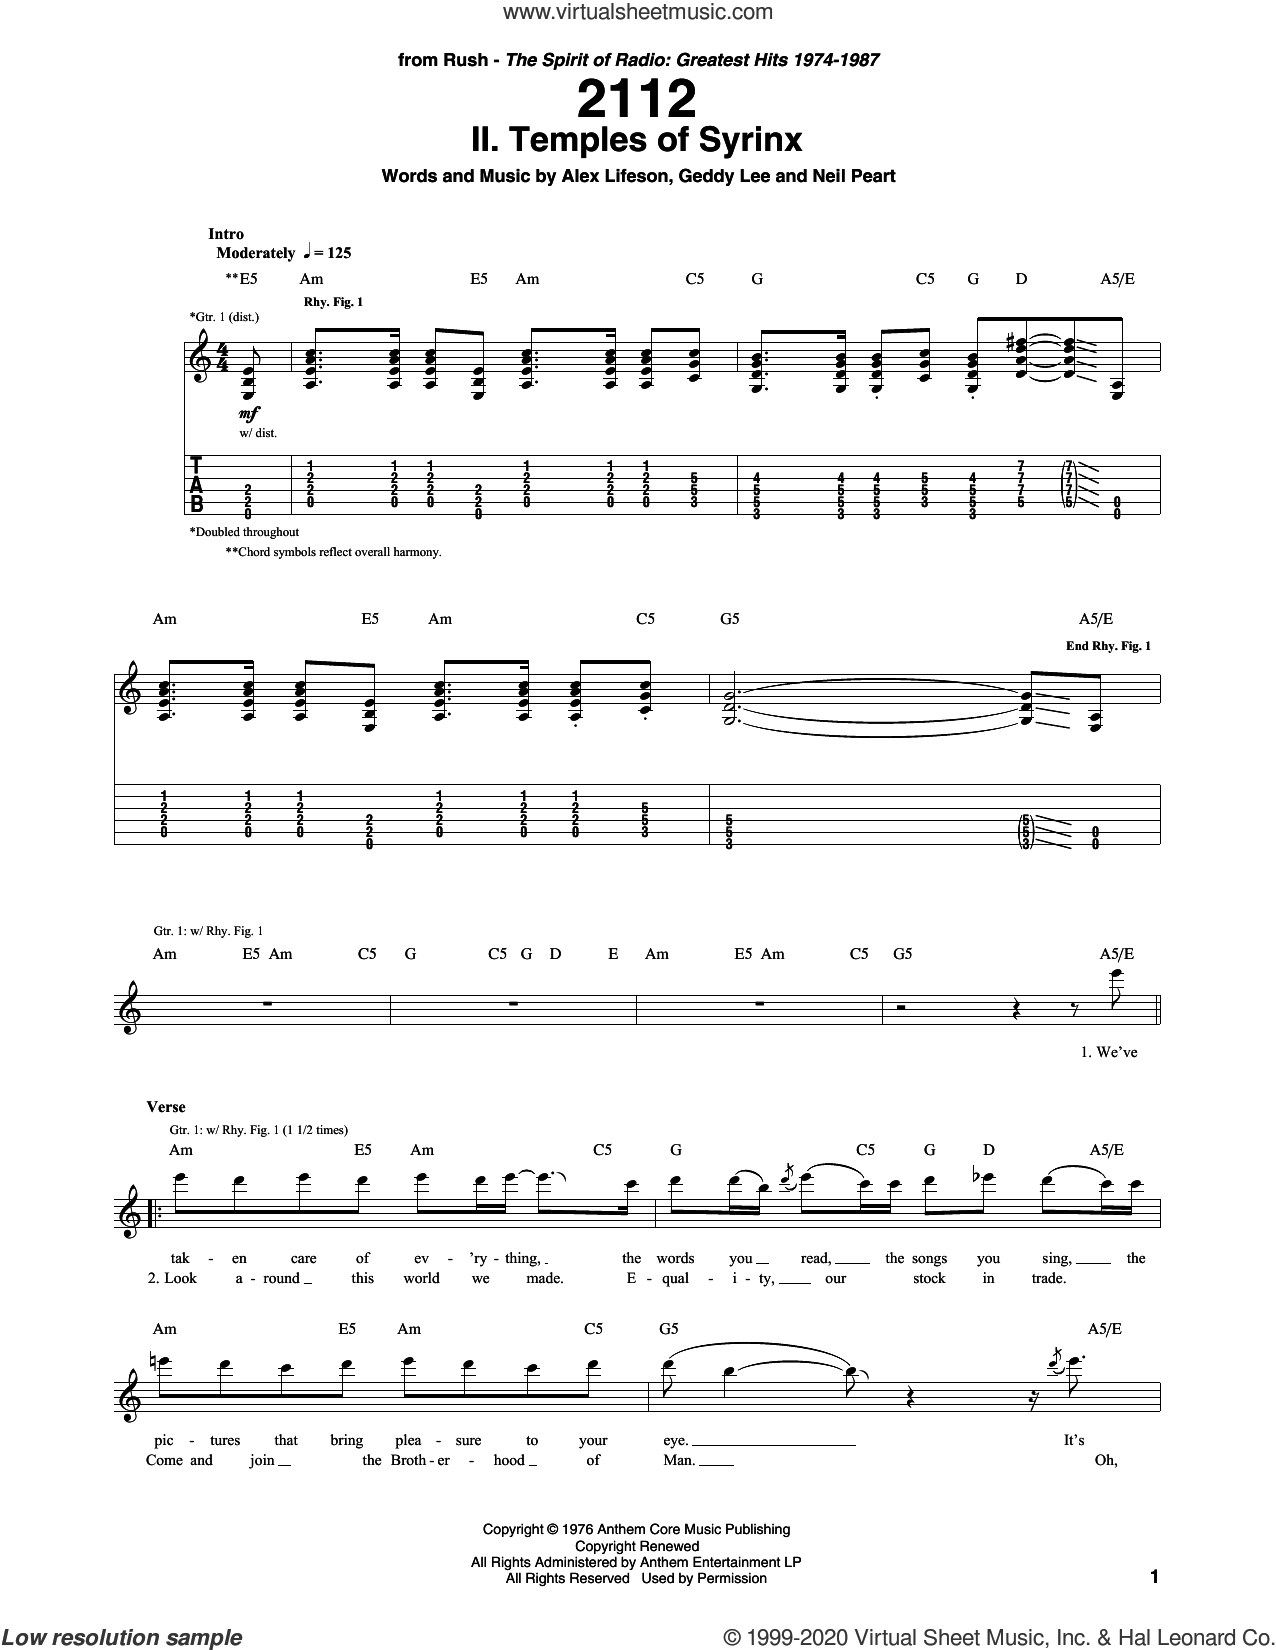 rush e sheet music pdf free